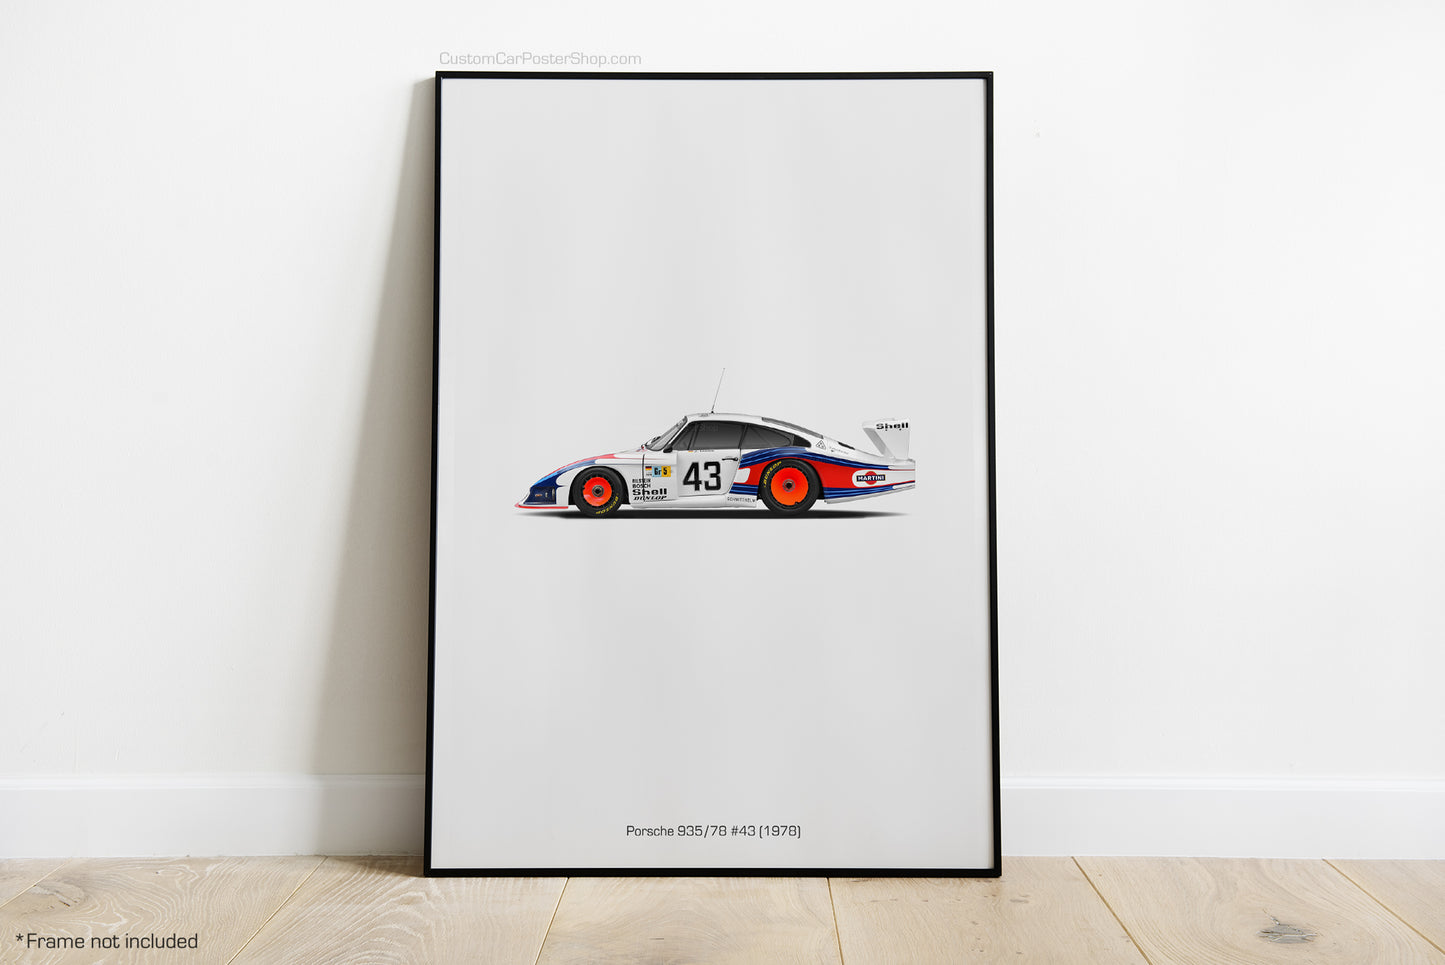 Porsche 935/78 "Moby Dick" Martini Racing Wall Art - Liveries